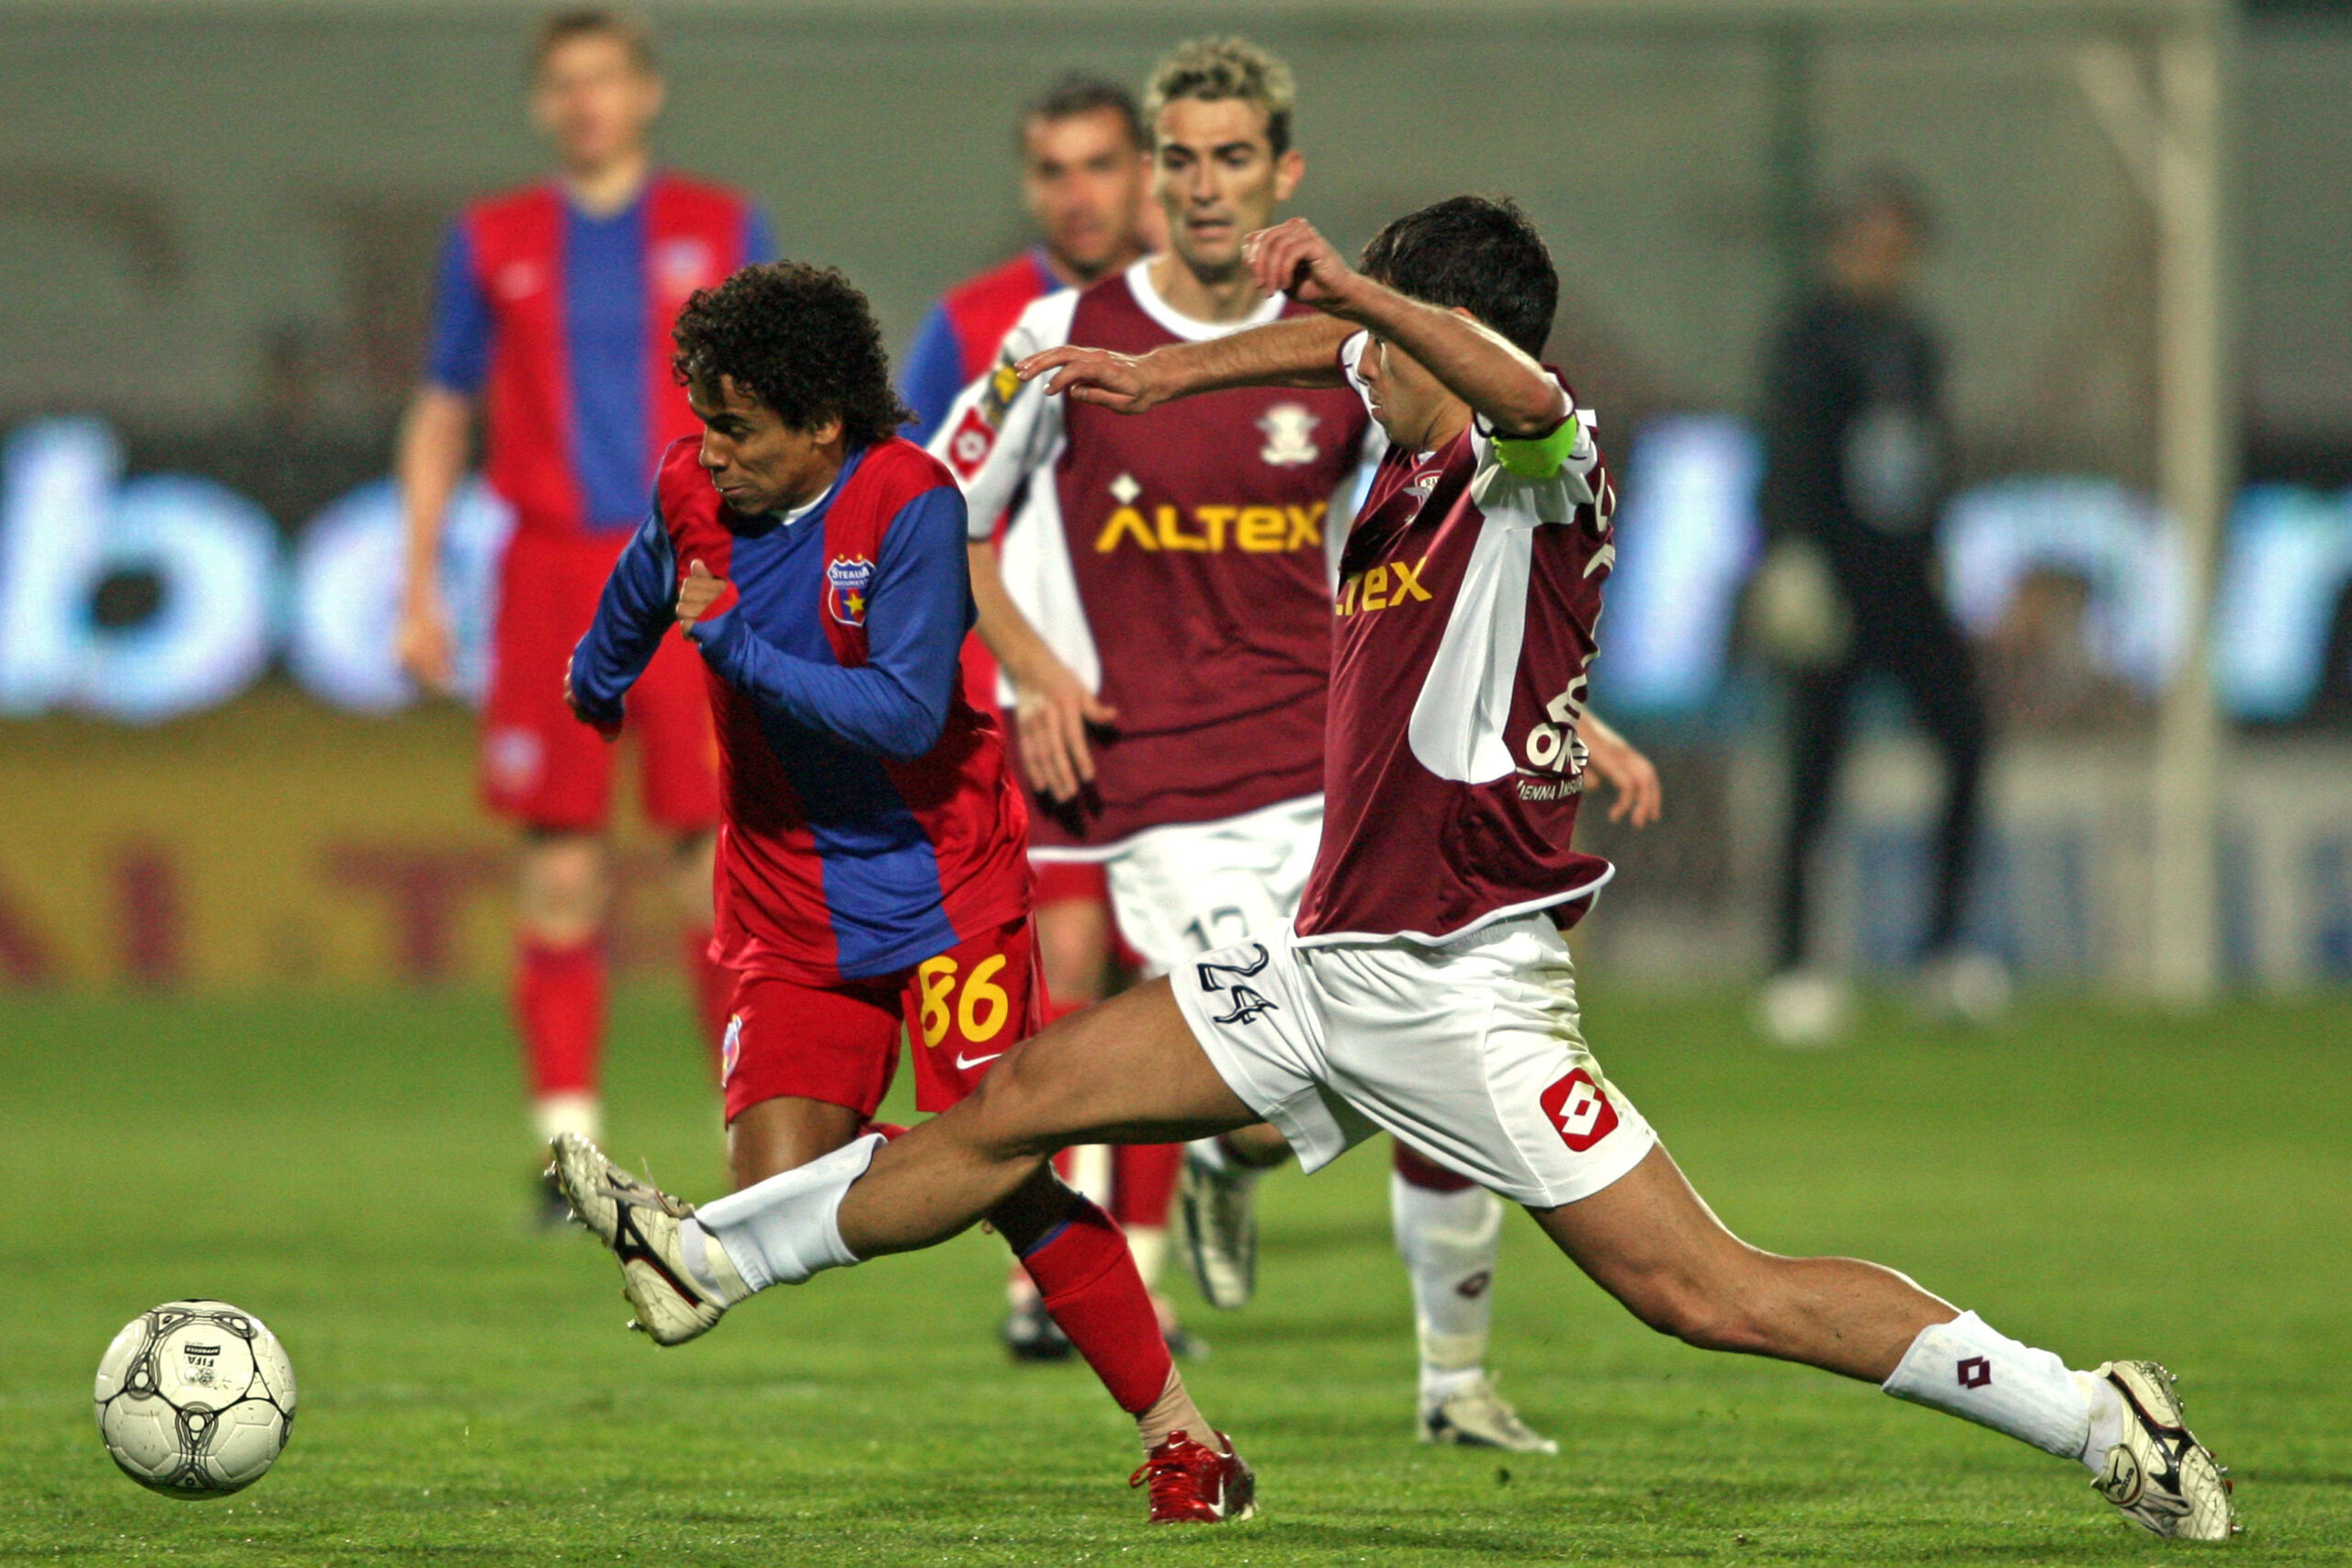 Jucatorul echipei de fotbal Steaua Bucuresti, Jose Xavier Elton (S), lupta pentru balon, duminica 1 aprilie 2007, cu jucatorul echipei Rapid Bucuresti, Vasile Maftei, intr-o partida din etapa a XXIV-a, a Ligii I la fotbal.